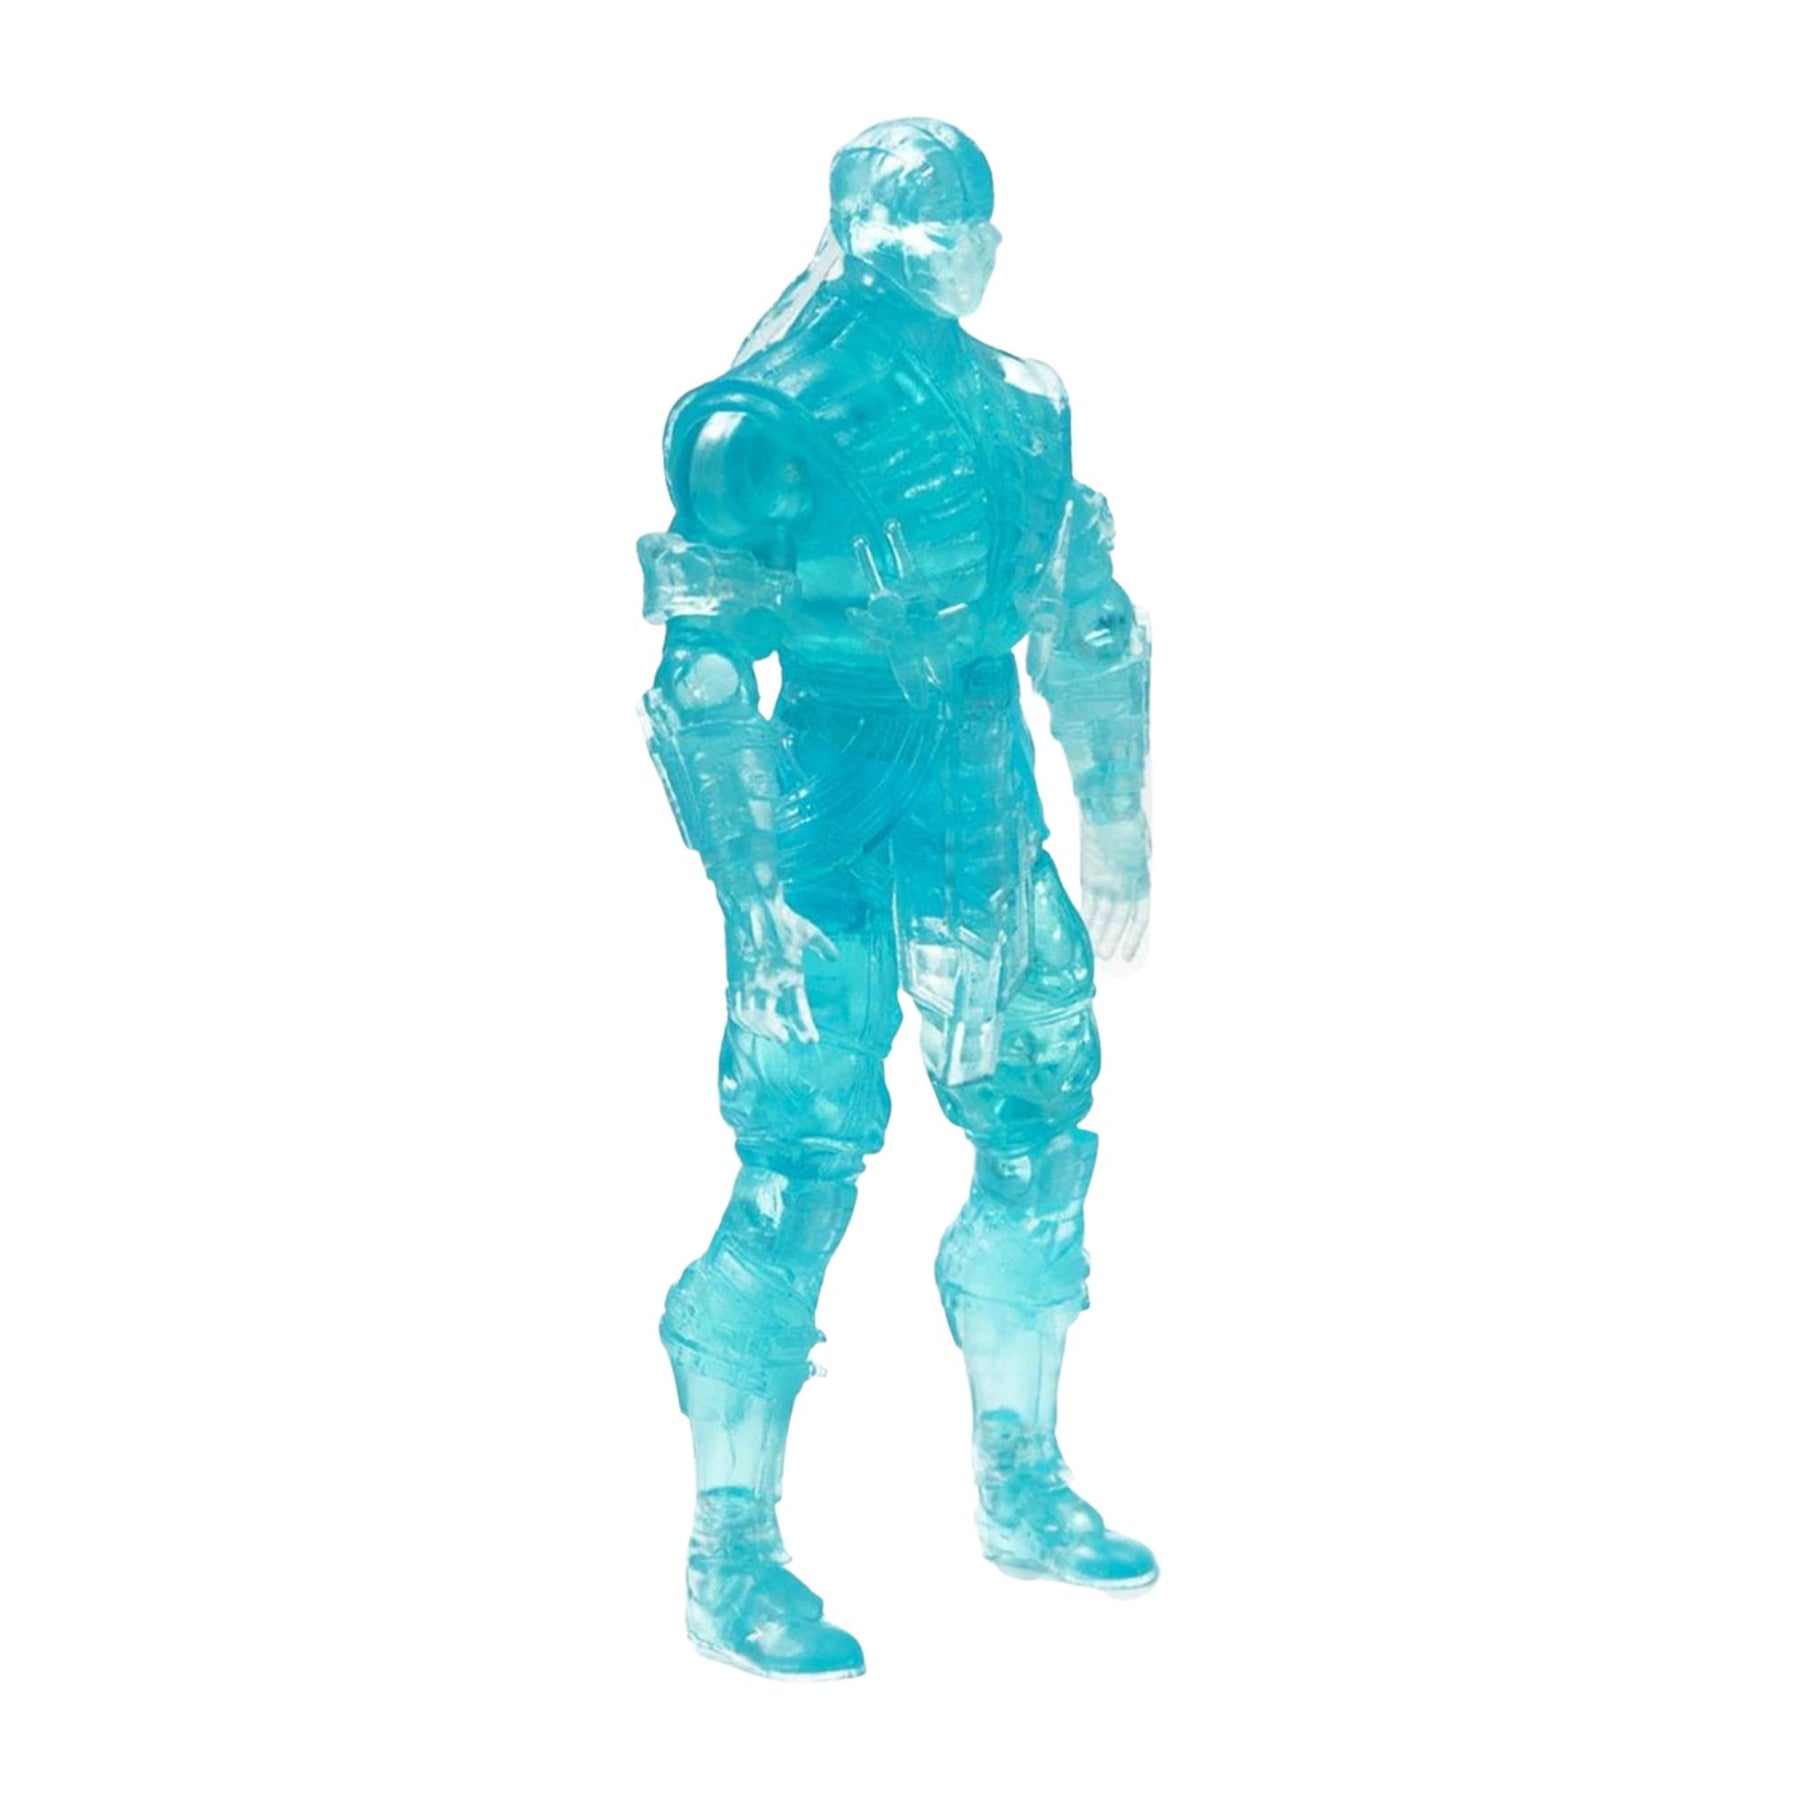 Mortal Kombat X 6" Action Figure: Sub-Zero (2015 SDCC Exclusive)